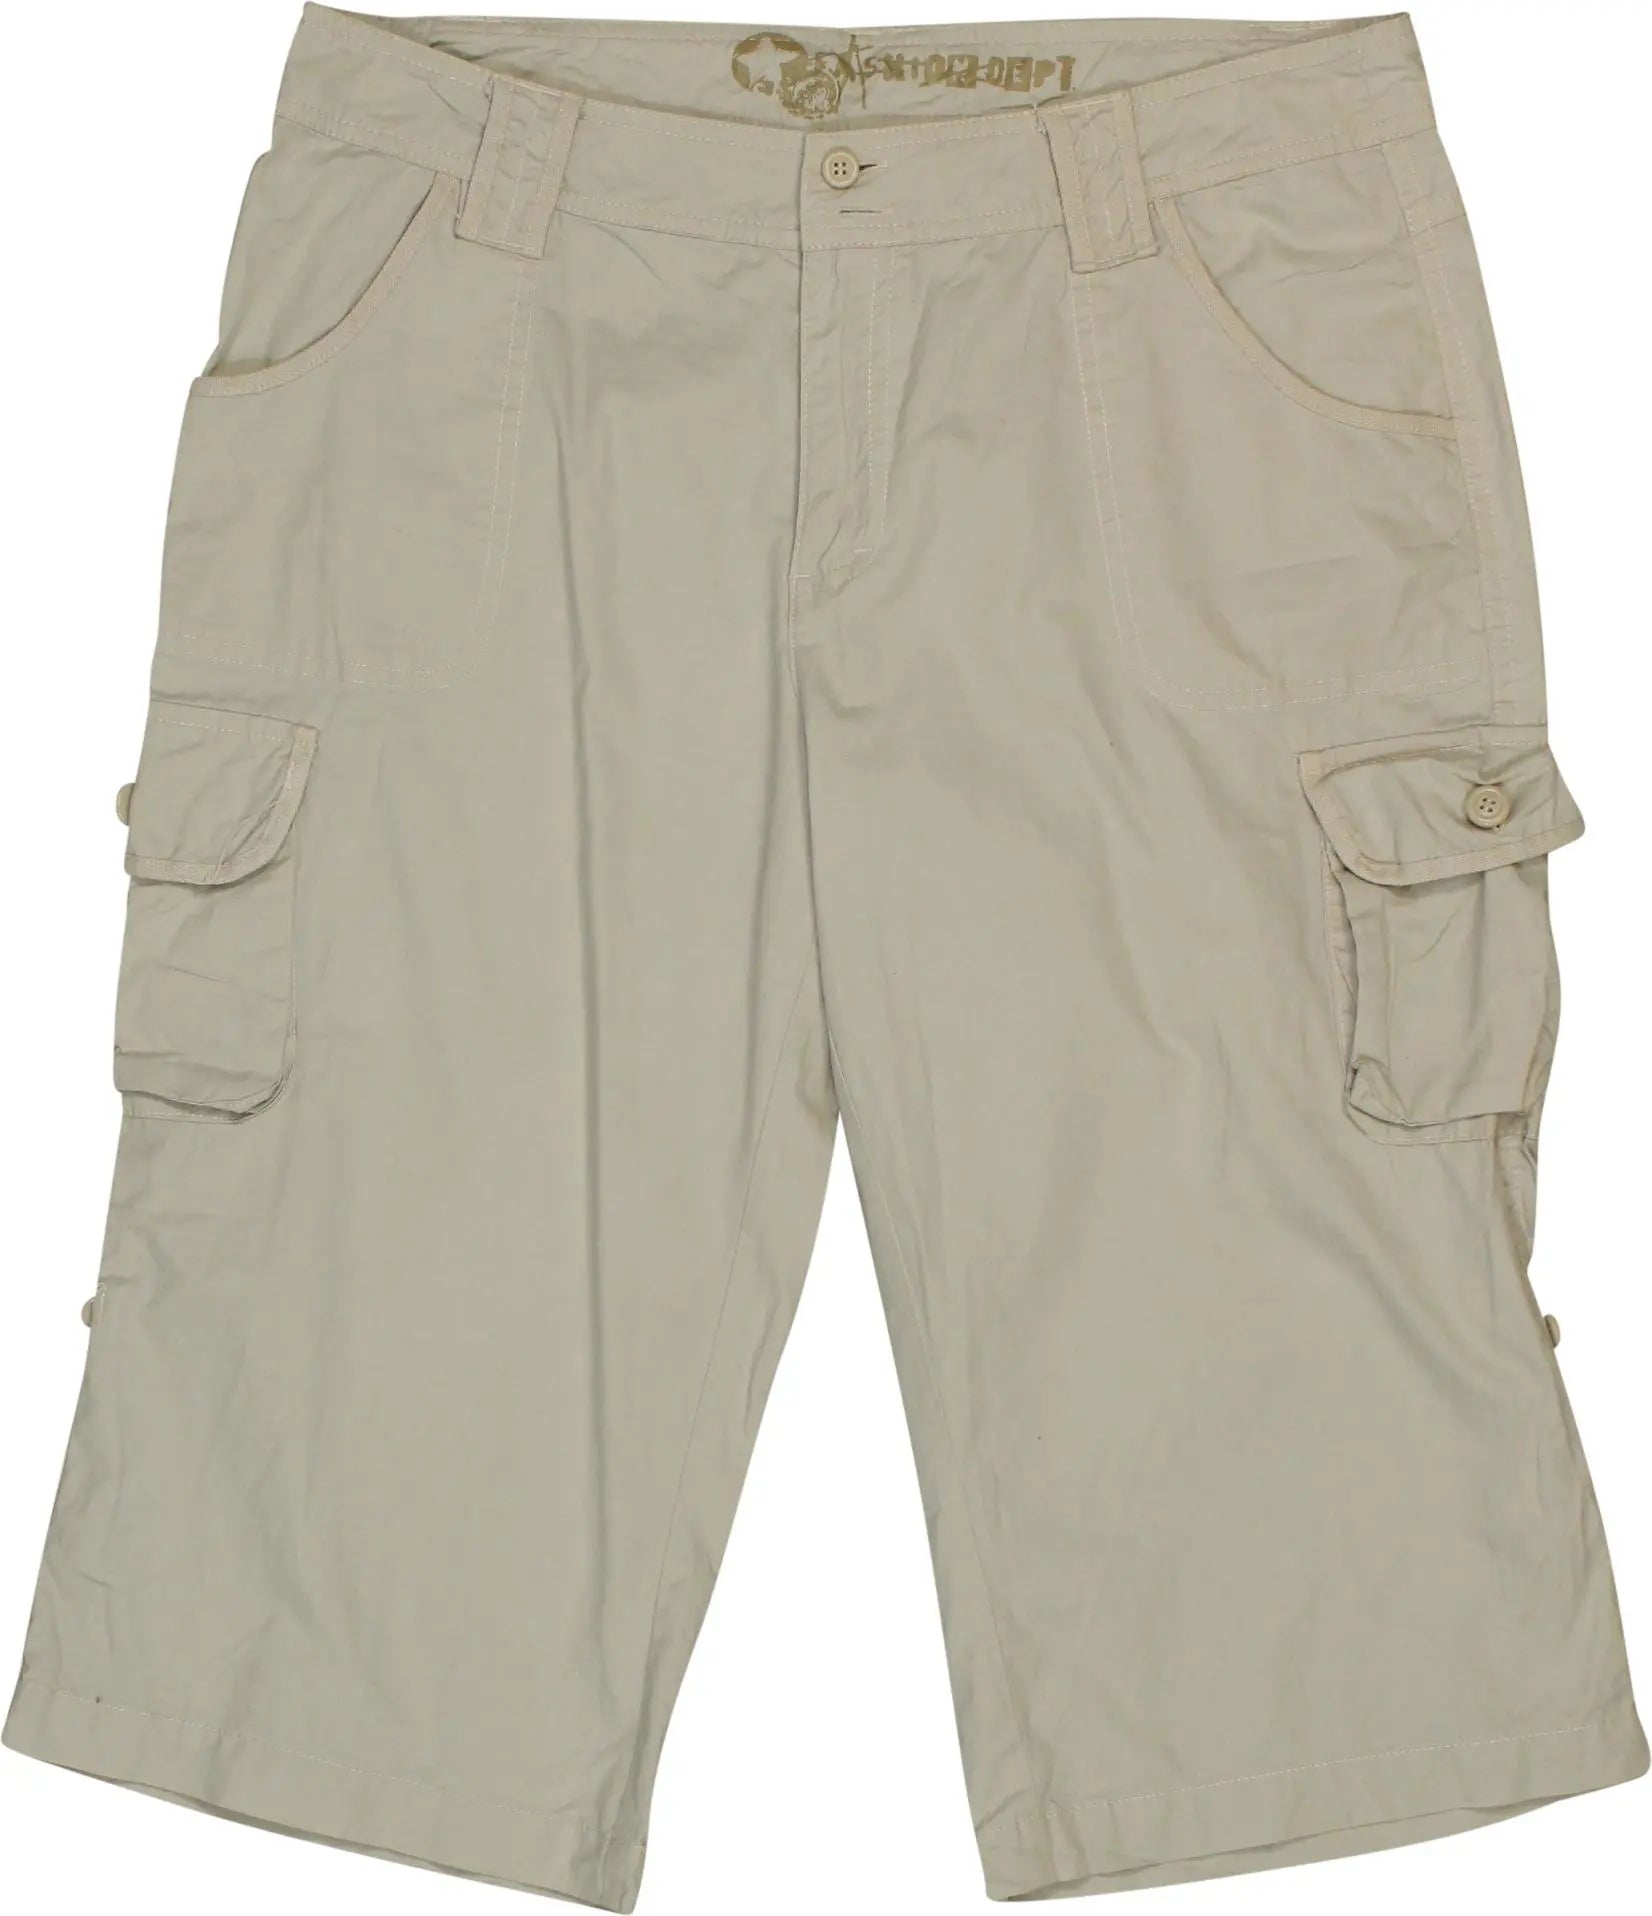 Set of Short capri pants technical fashion illustration with mid-calf  length, normal waist, high rise,